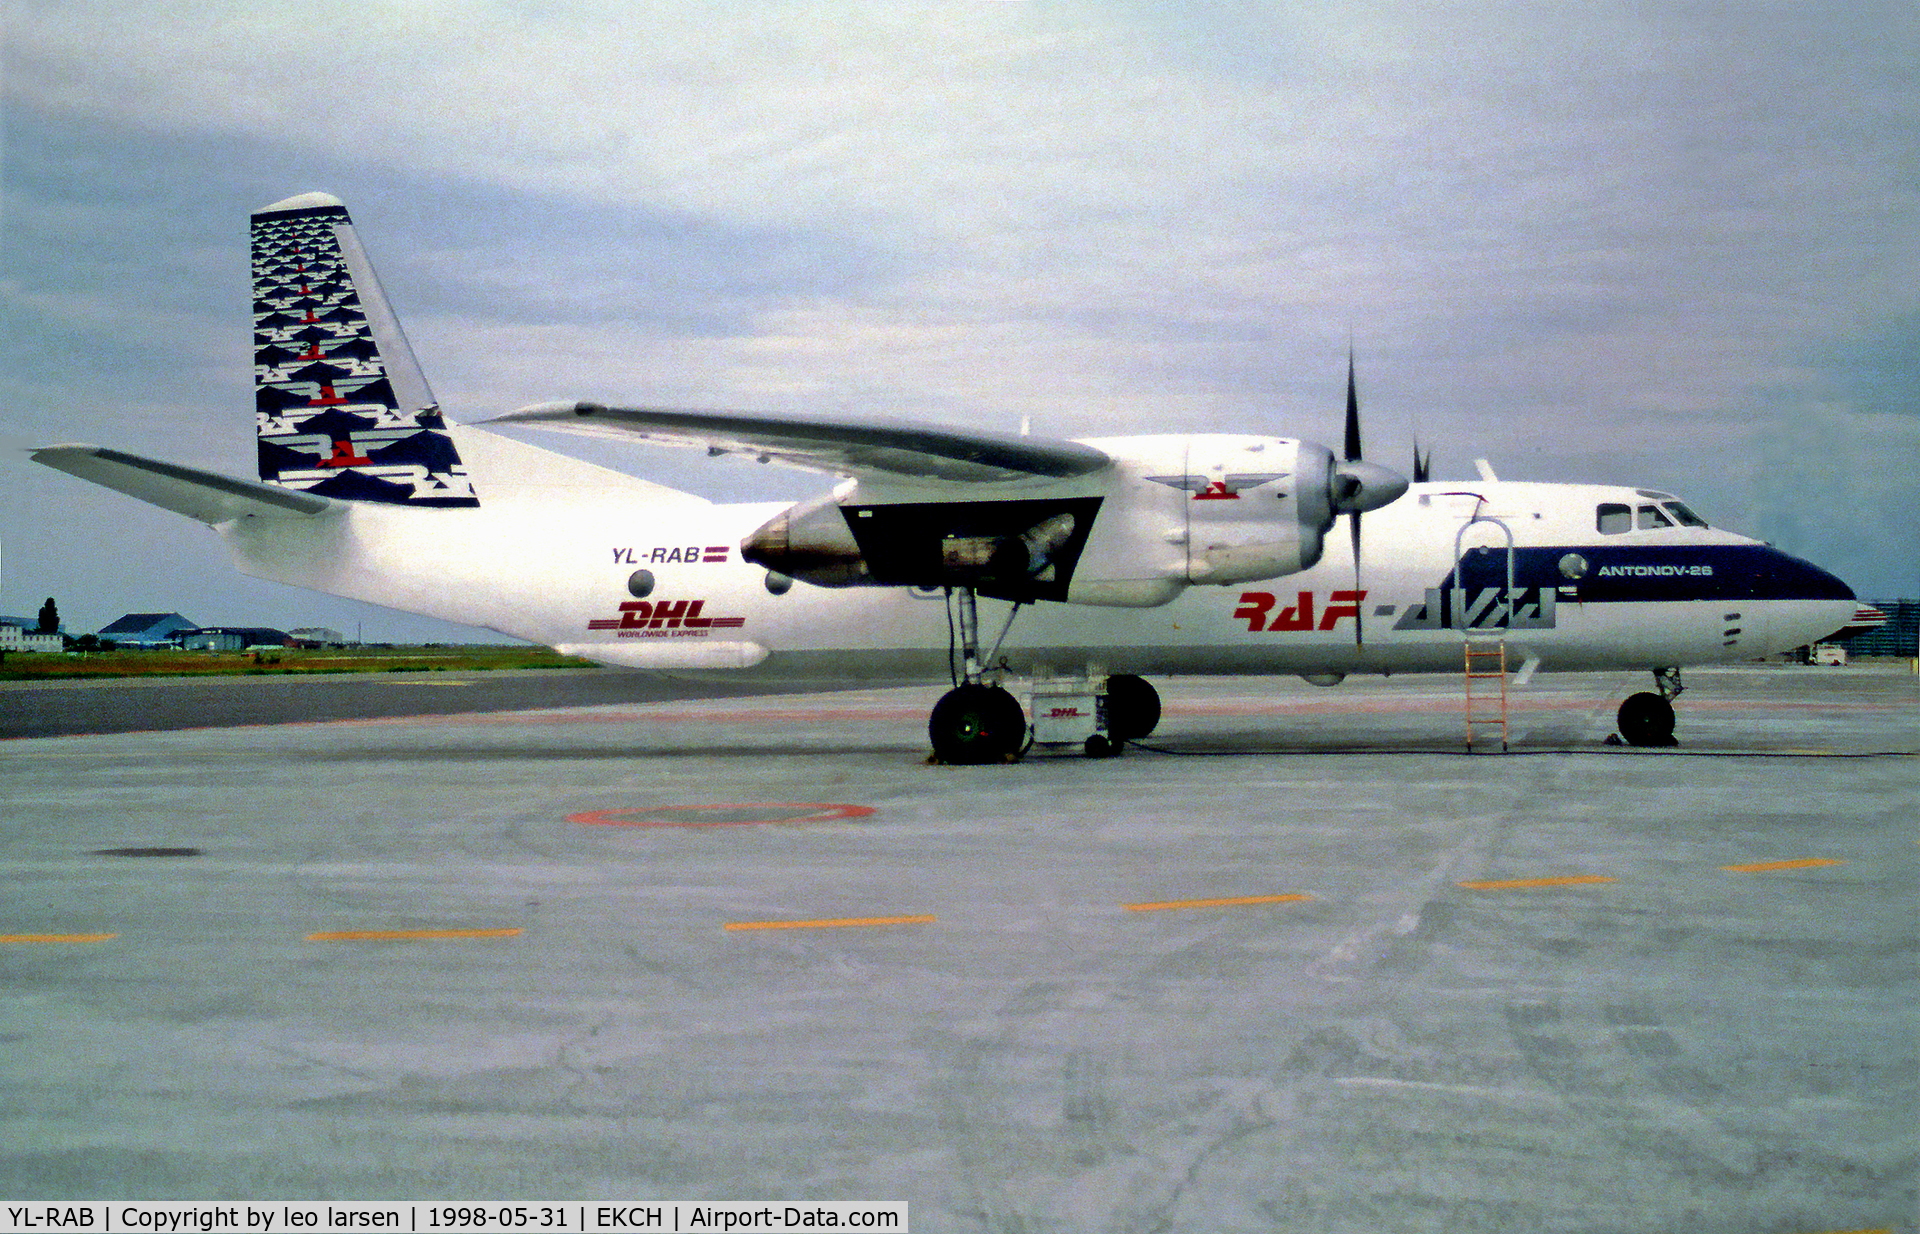 YL-RAB, 1980 Antonov An-26B C/N 7310508, Copenhagen Kastrup 31.5.98 with DHL sign